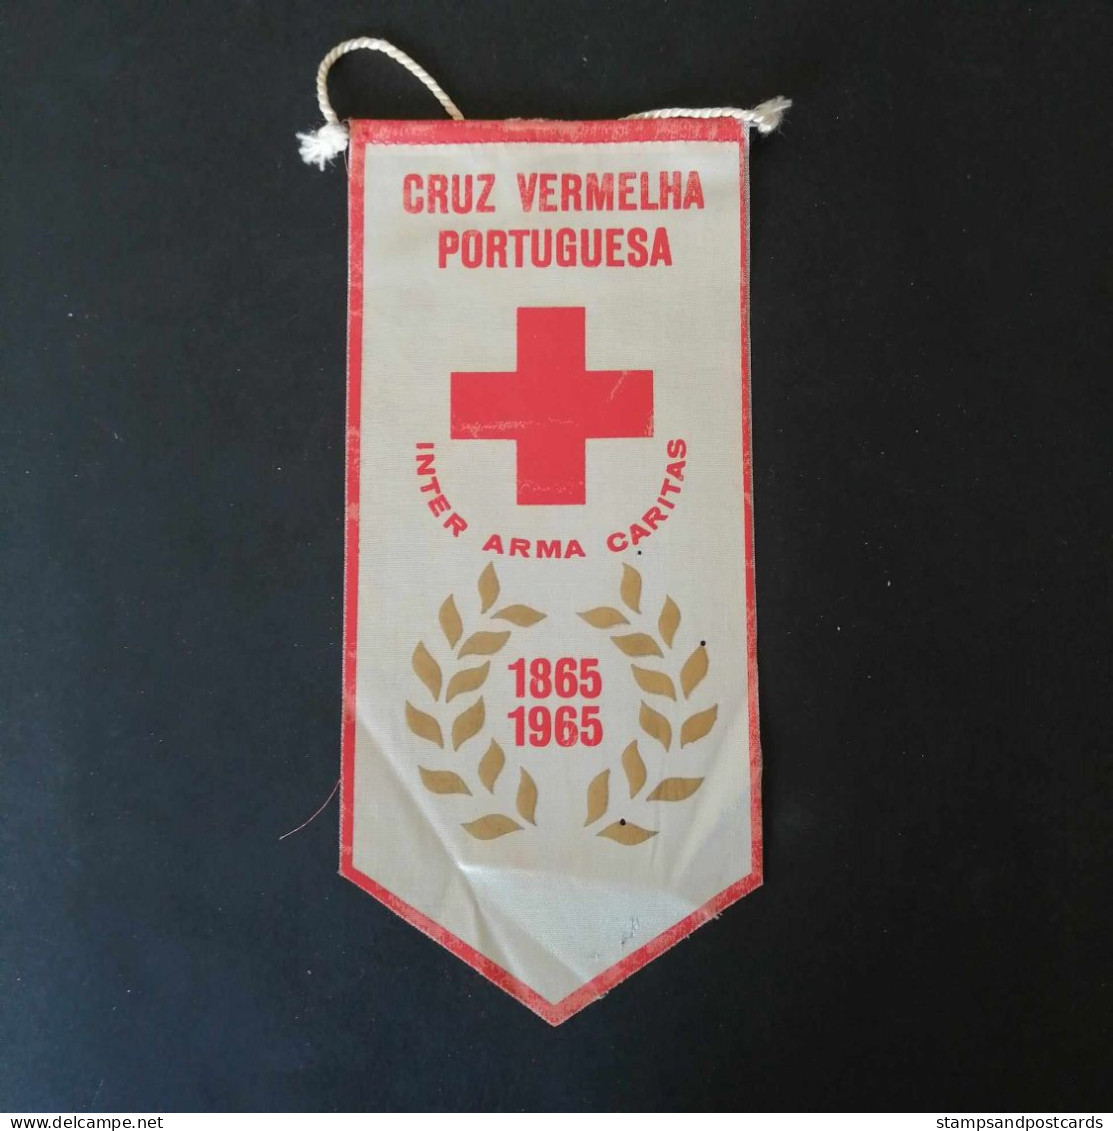 Portugal Cruz Vermelha Portuguesa Bandeirola 1965 Croix-Rouge Fanion Red Cross Pennant - Croce Rossa